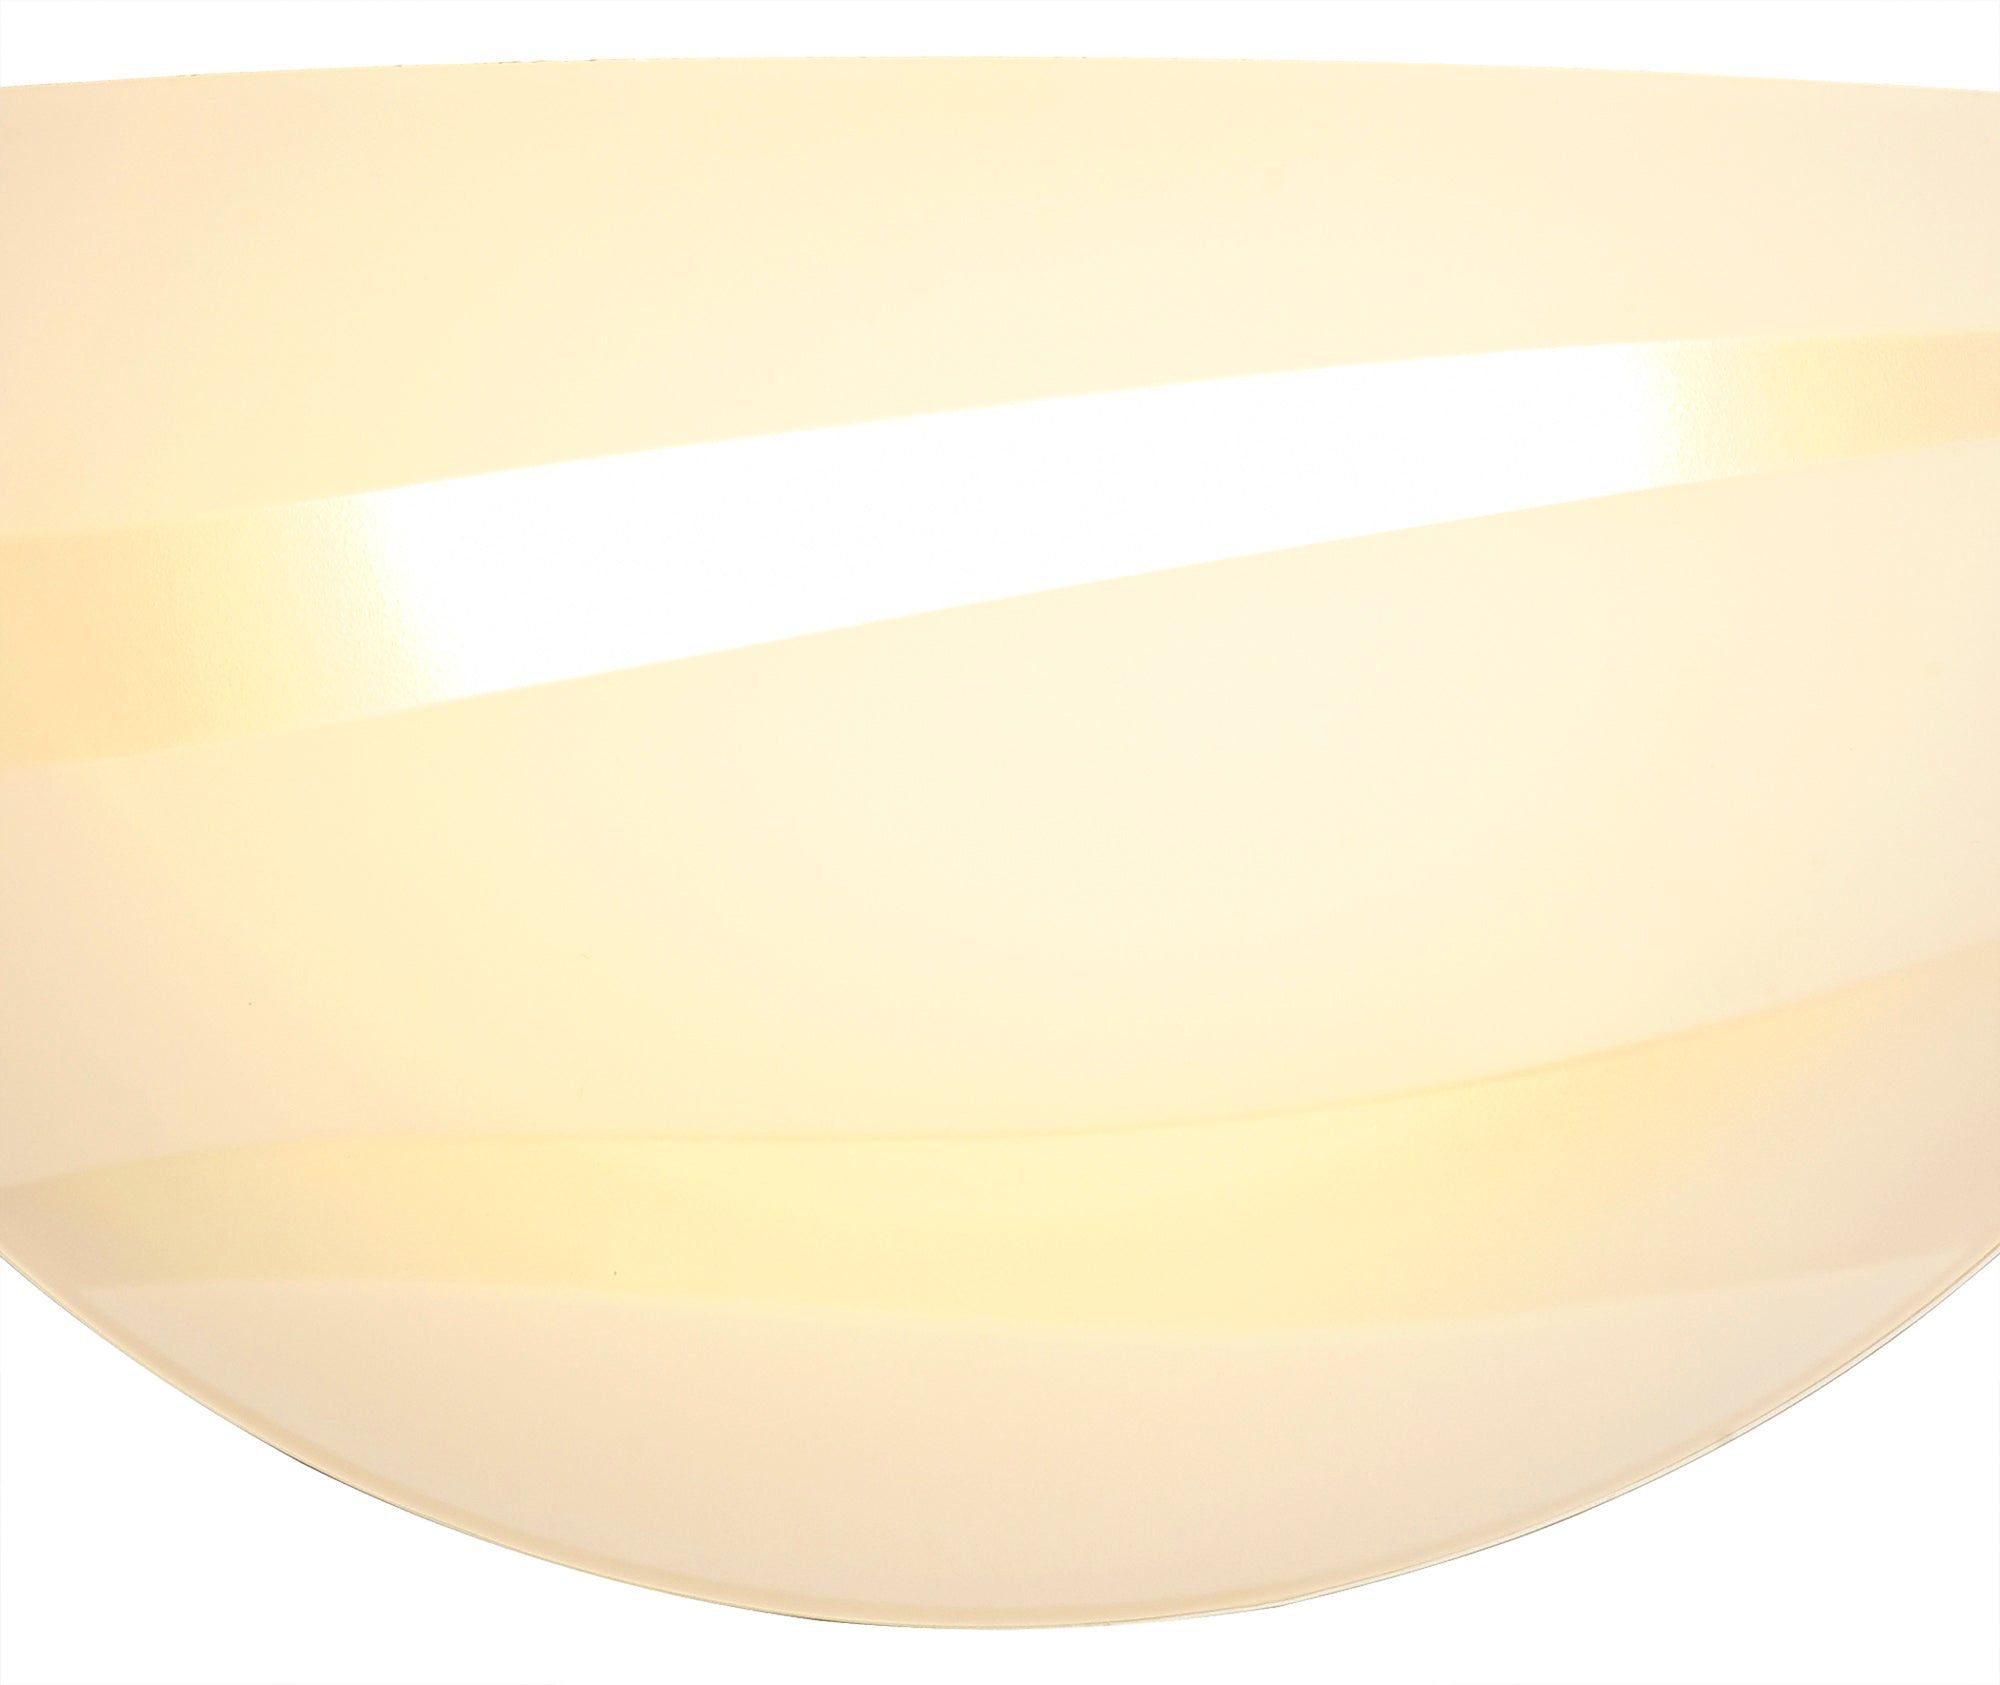 Histser Wall Lamp, 1 x 12W LED, 3000K, 780lm, Polished Chrome/White, 3yrs Warranty